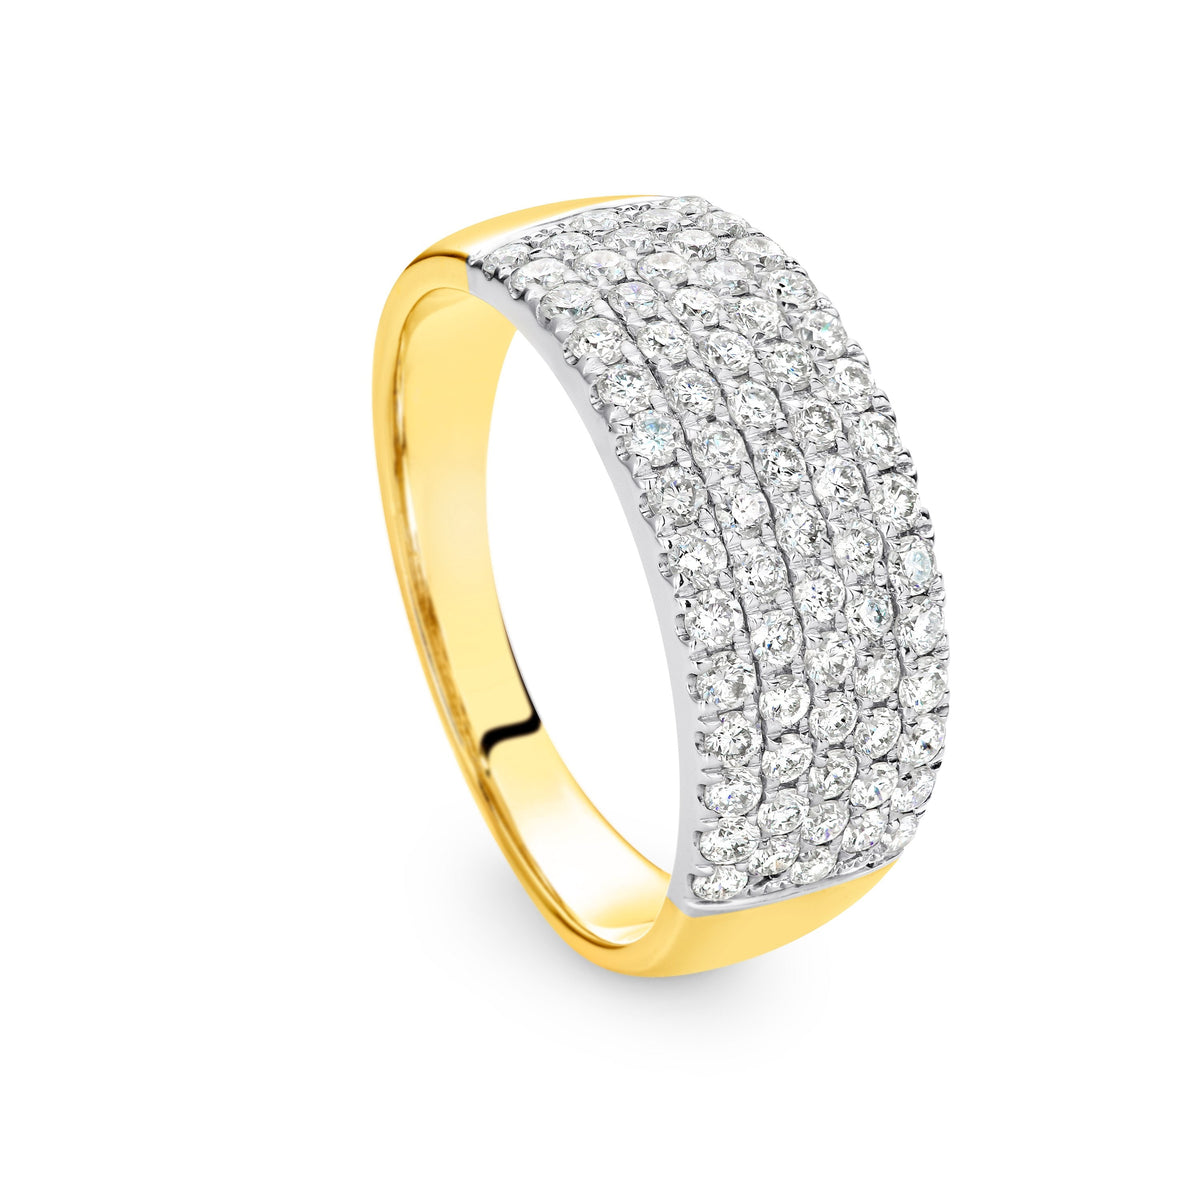 Engagement Rings - Wedding Rings - Yellow Gold Rings - Morganite Rings White Gold - Ruby White Gold Rings - Engagement Rings Rose Gold - Duffs Jewellers